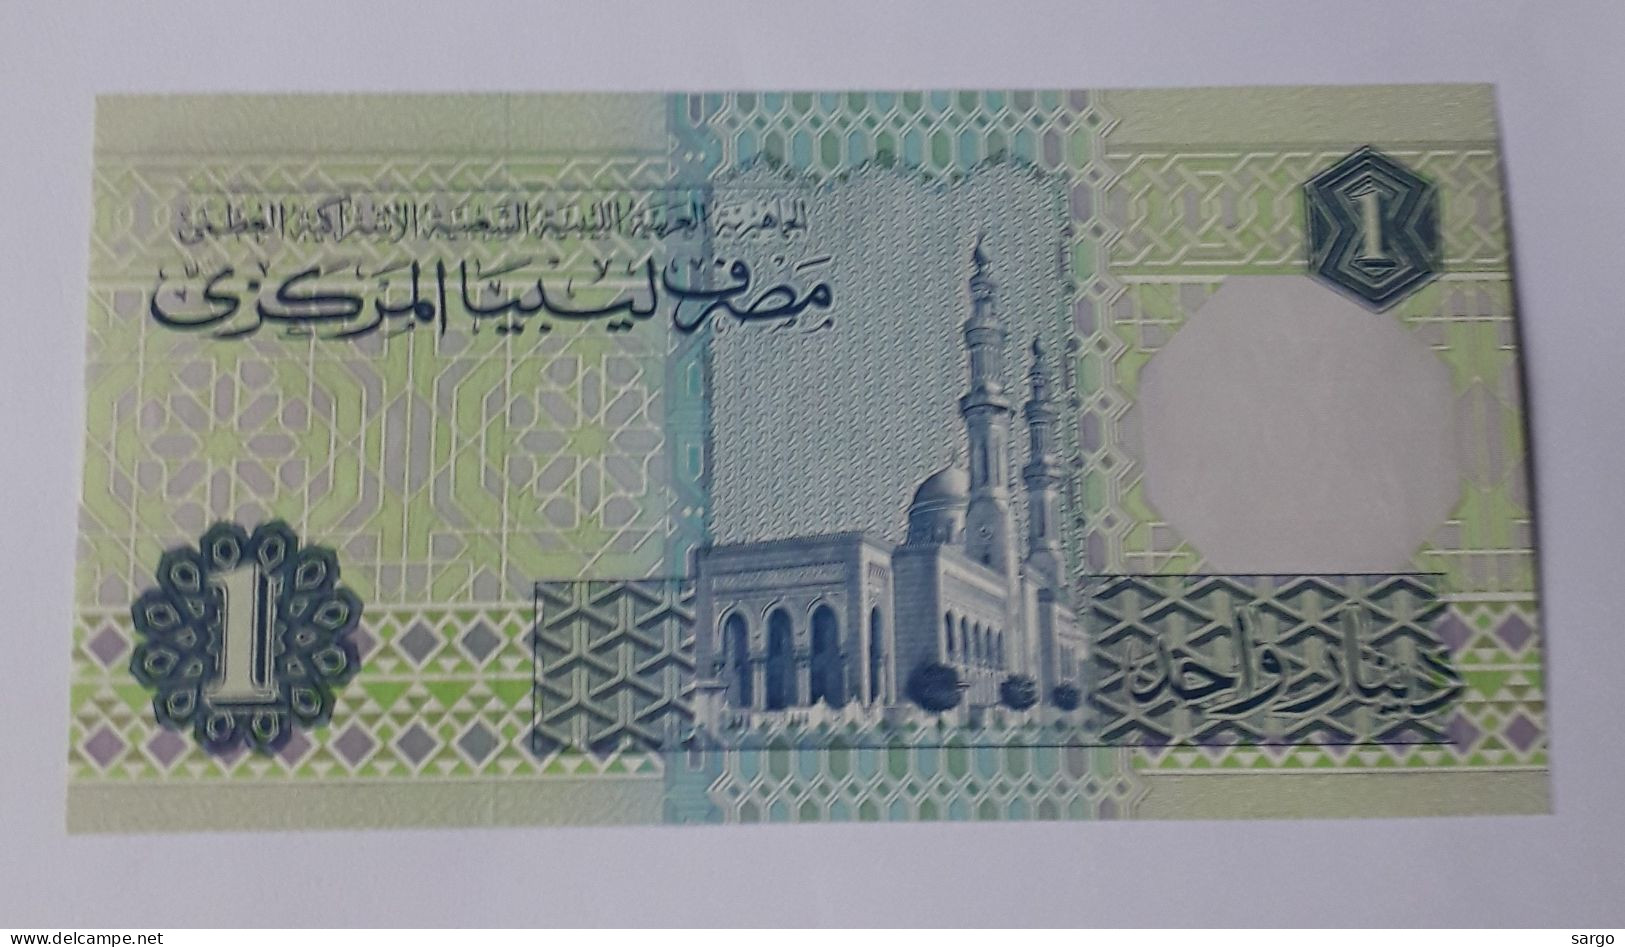 LIBYA - 1 DINAR - 1991 -  P 59b  - UNC - BANKNOTES - PAPER MONEY - CARTAMONETA - - Libya